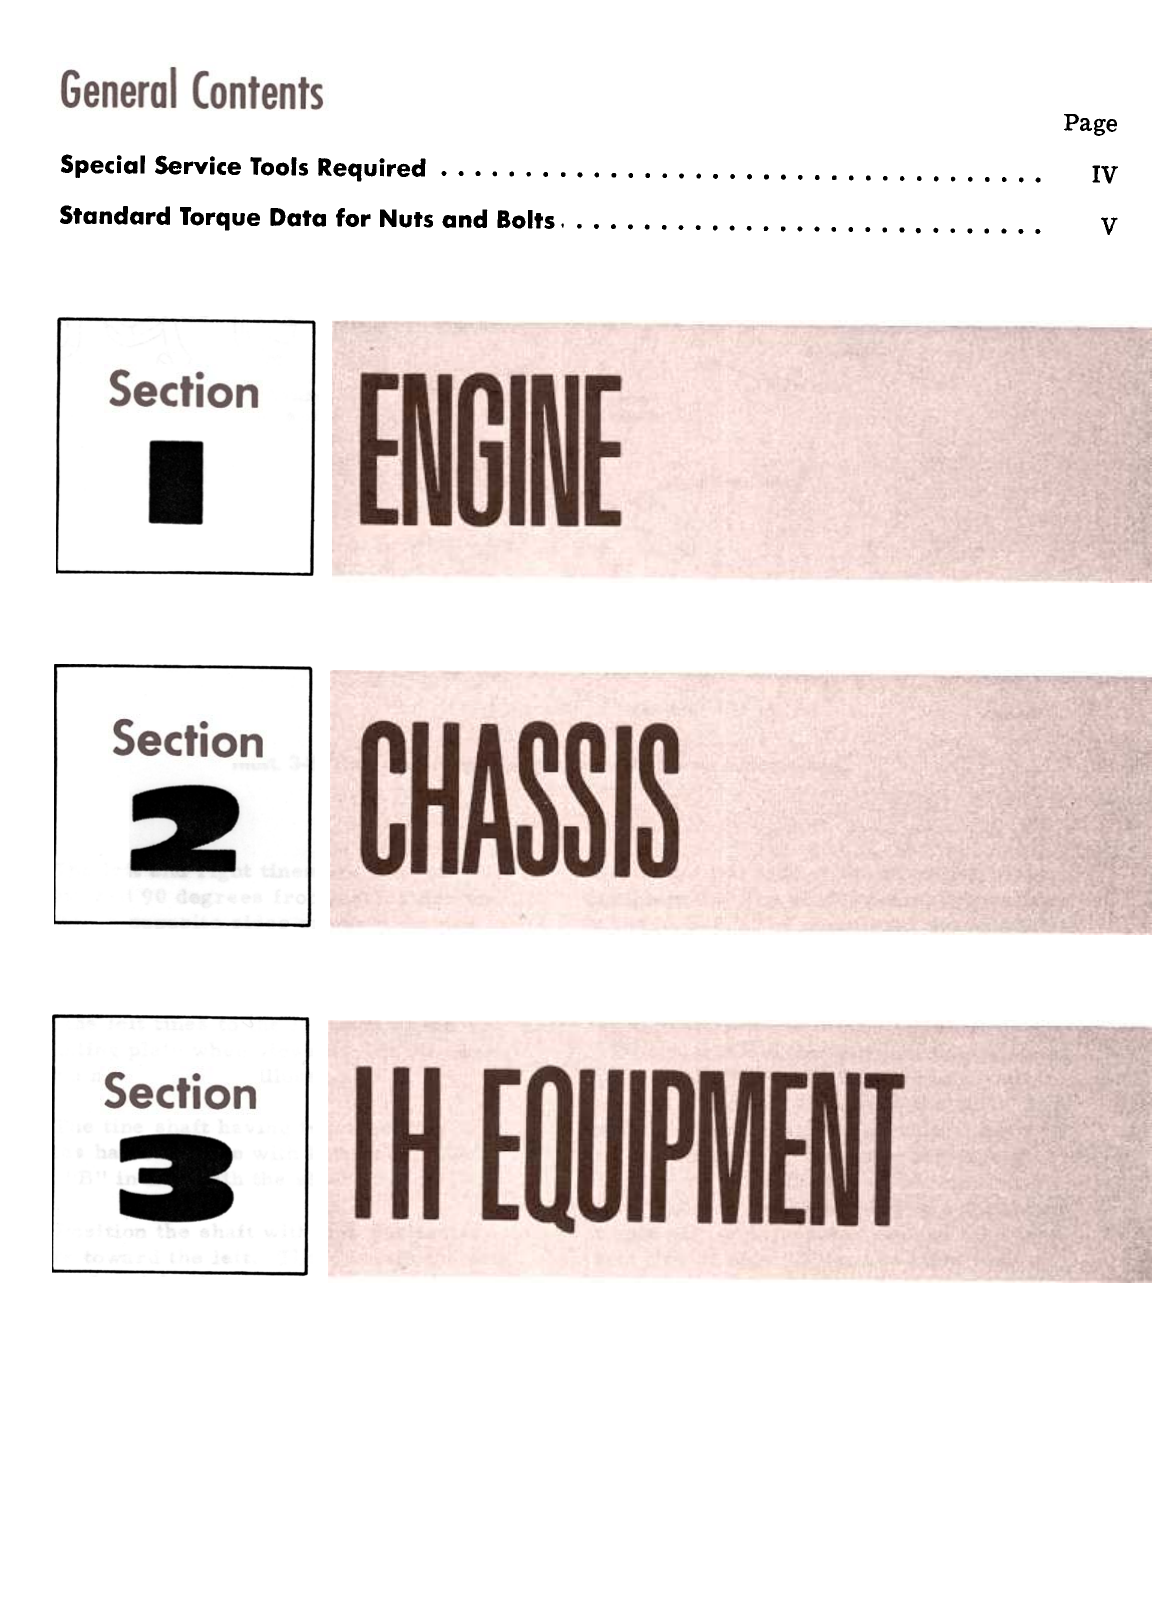 1969-1971 International™ IH Cub Cadet 73, 106, 107, 126, 127, 147 garden tractor manual Preview image 4